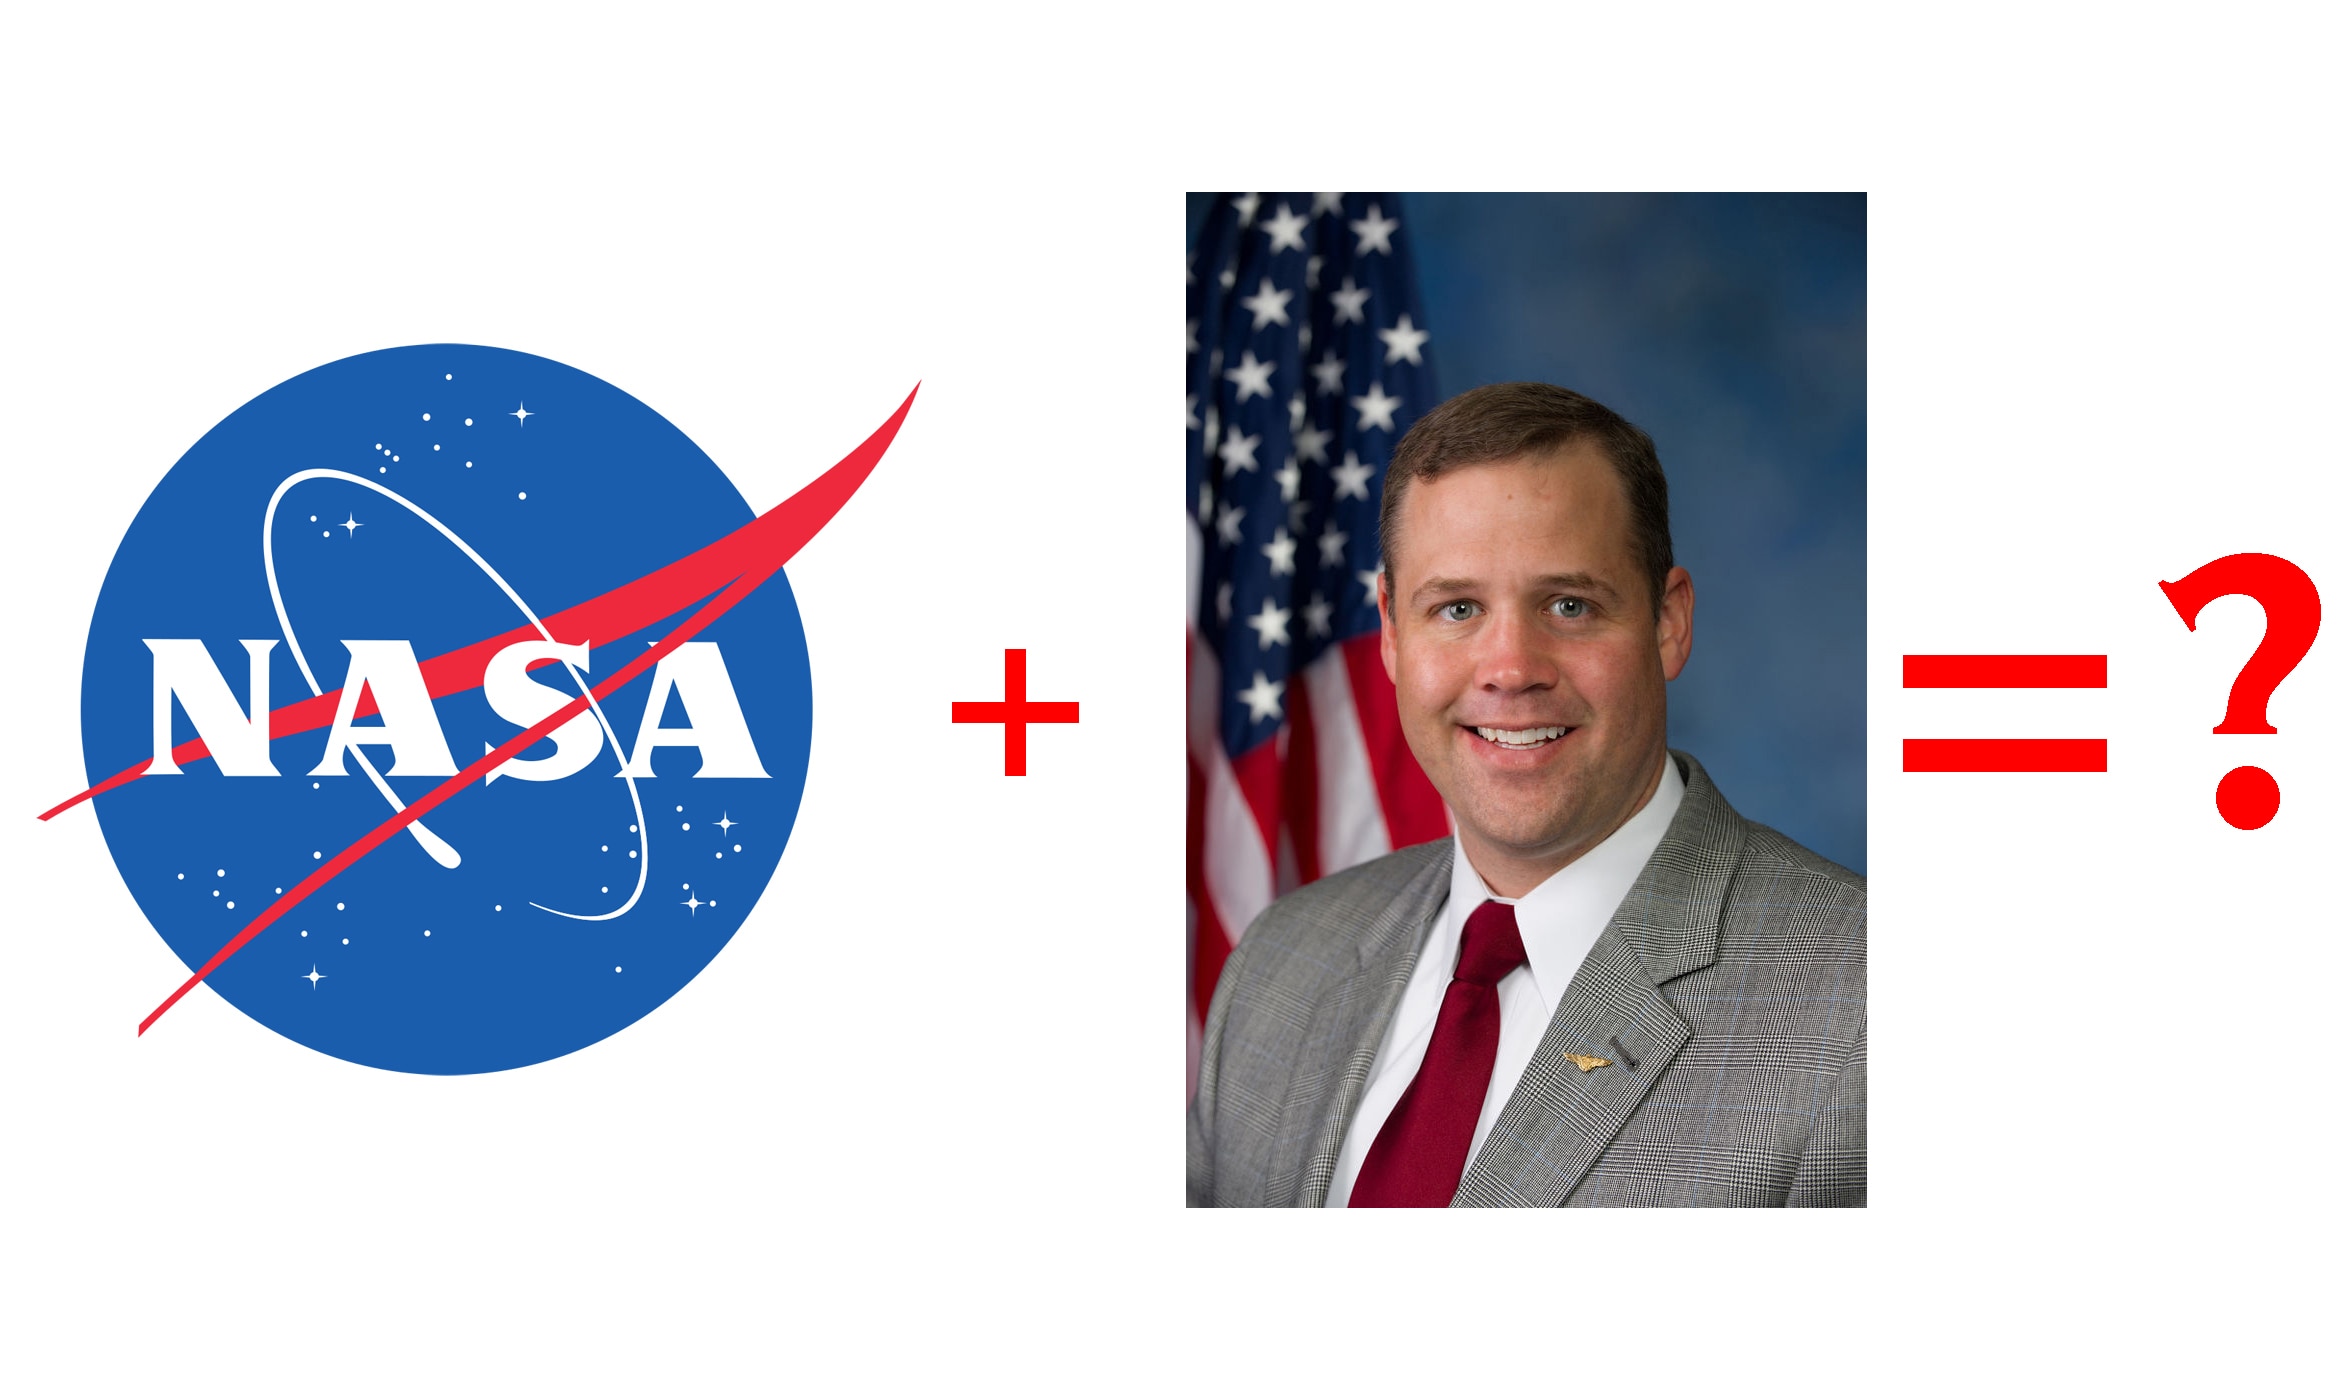 Jim Bridenstine and NASA